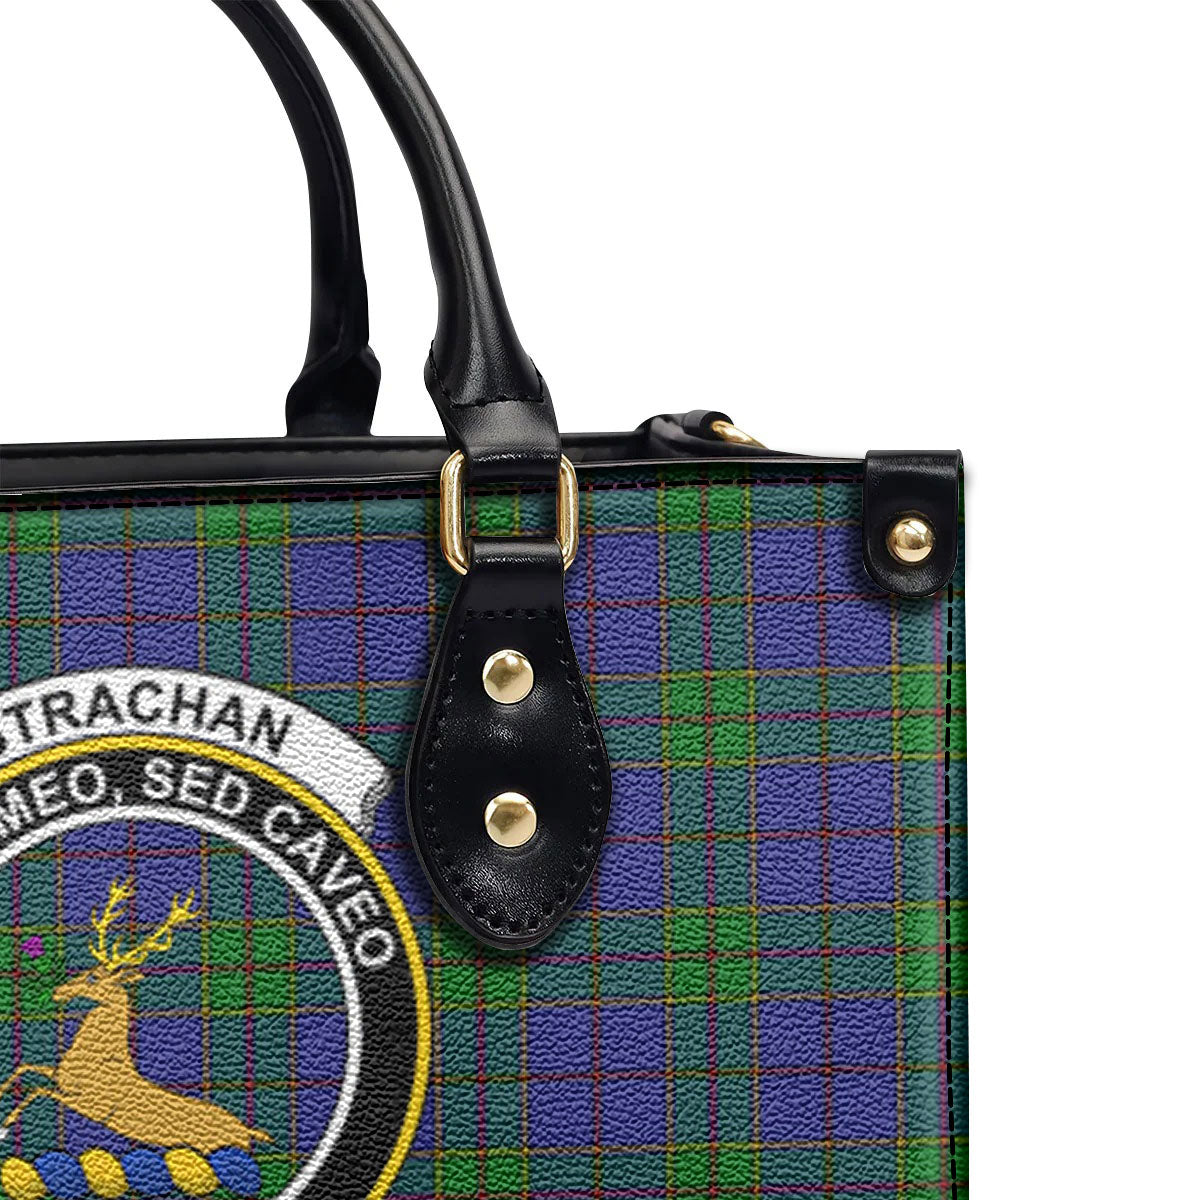 Strachan Tartan Crest Leather Handbag